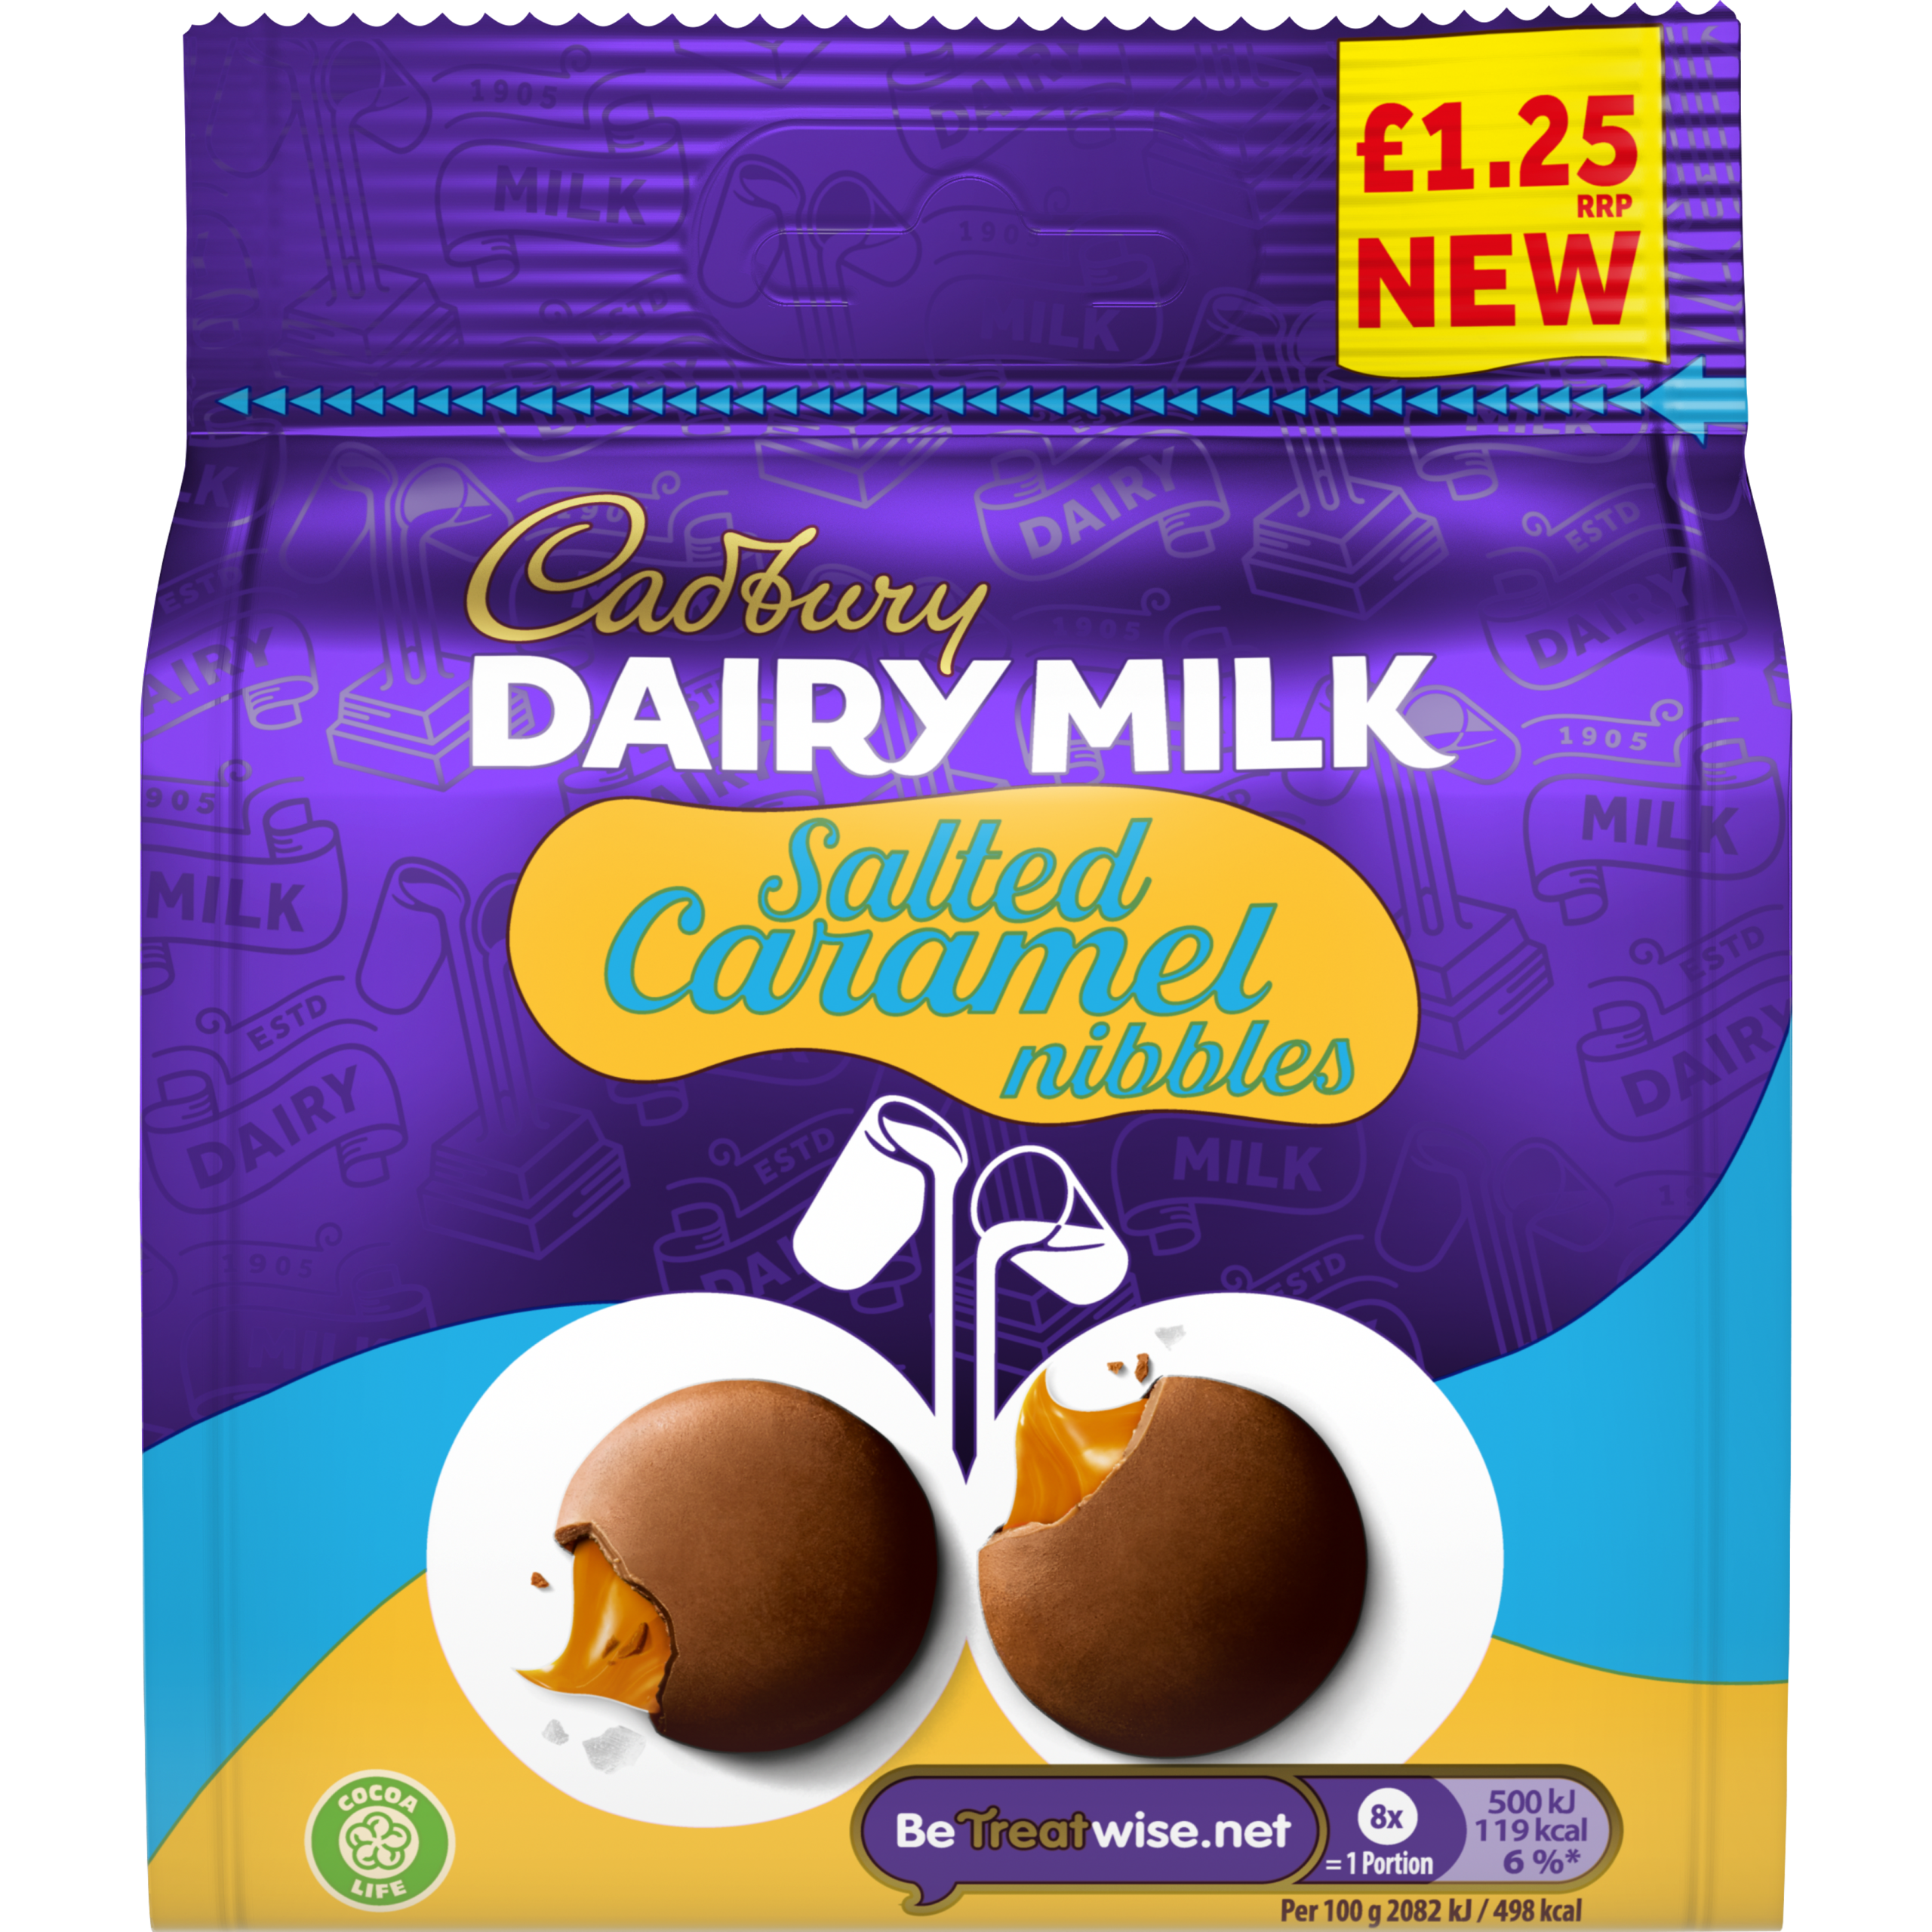 Cadbury Caramel adds three-strong Salted Caramel flavour range